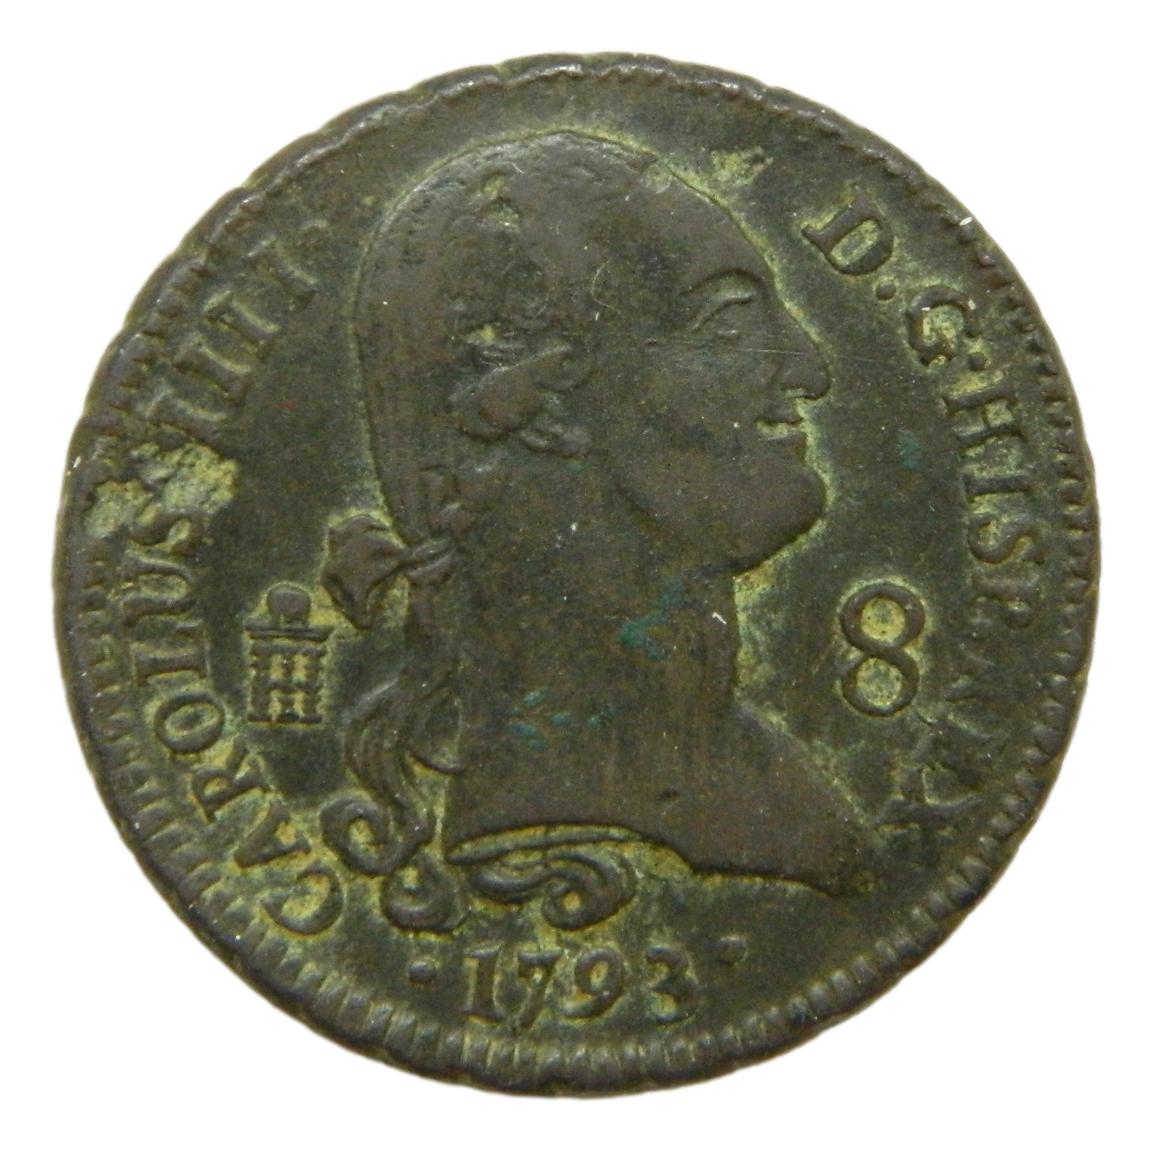 1793 - CARLOS IV - 8 MARAVEDIS - SEGOVIA